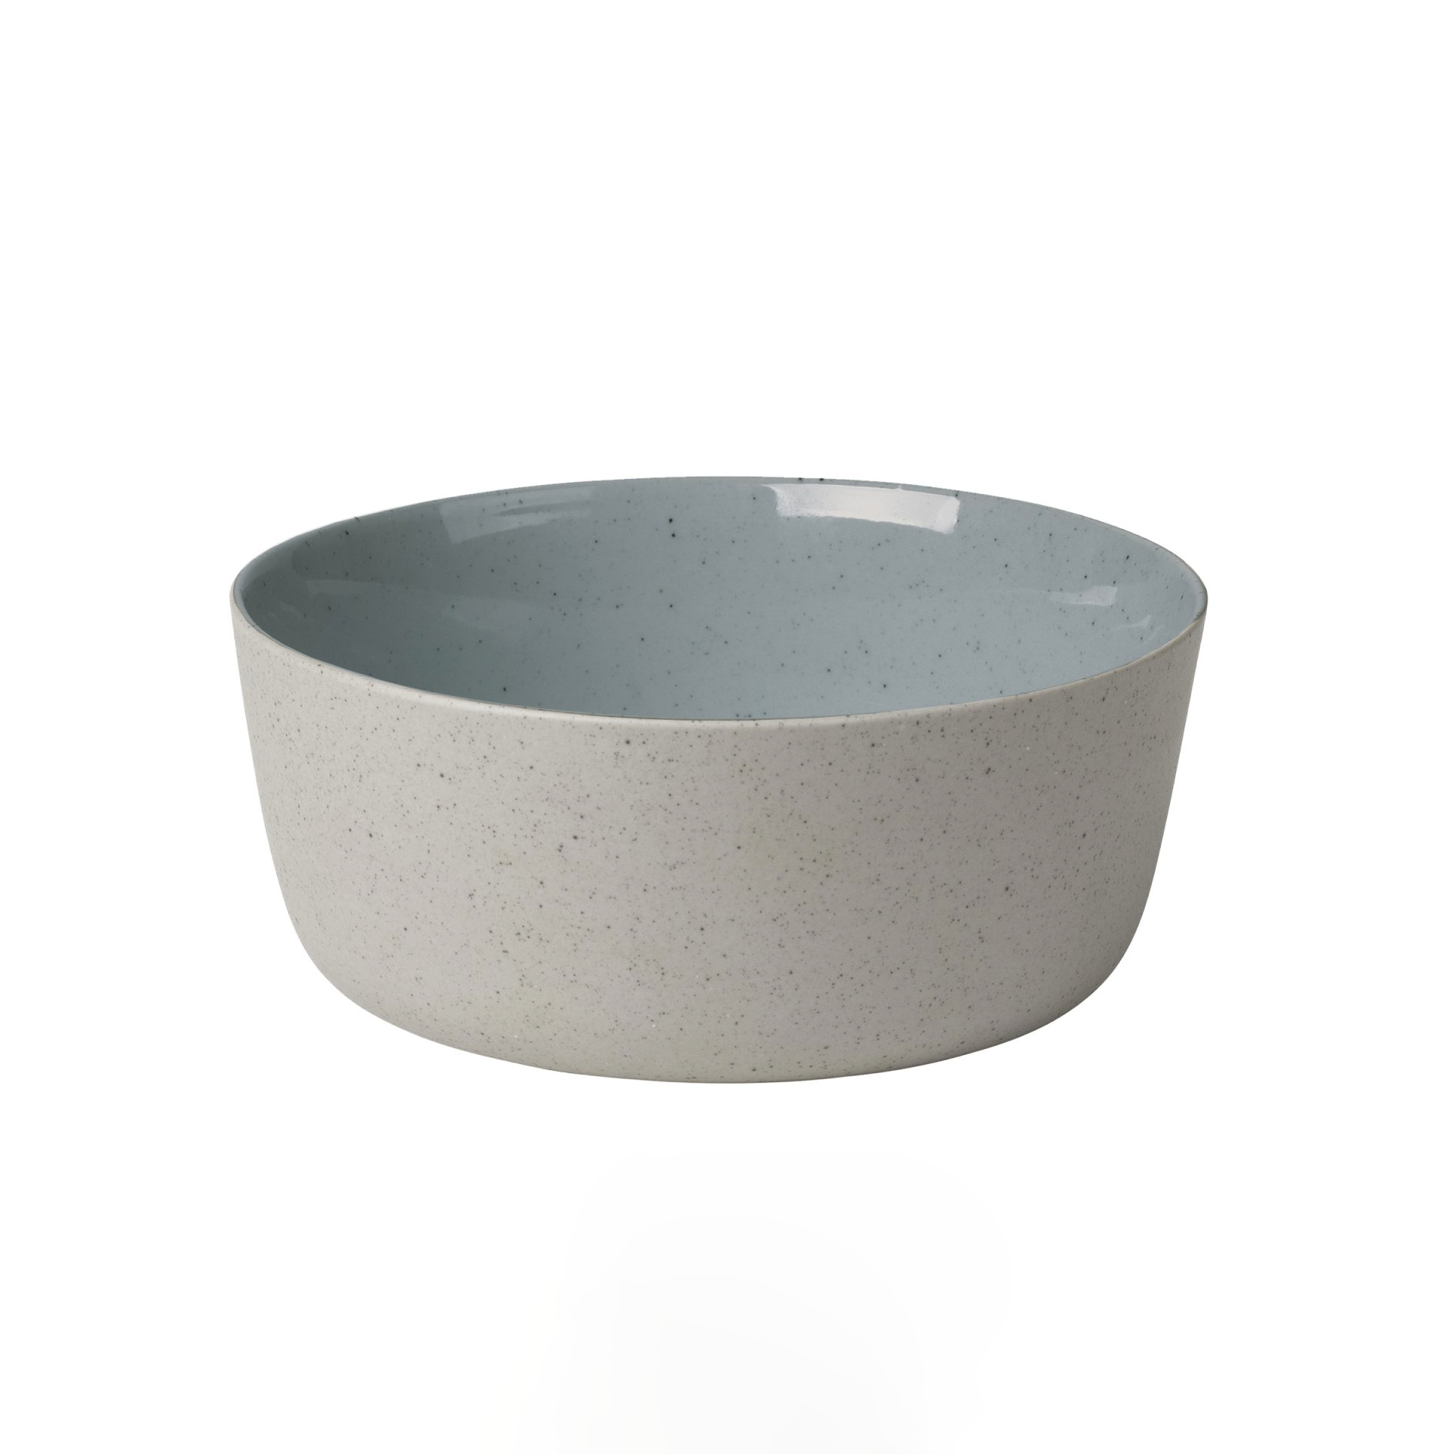 SABLO Stoneware Bowl in Stone Grey - Medium